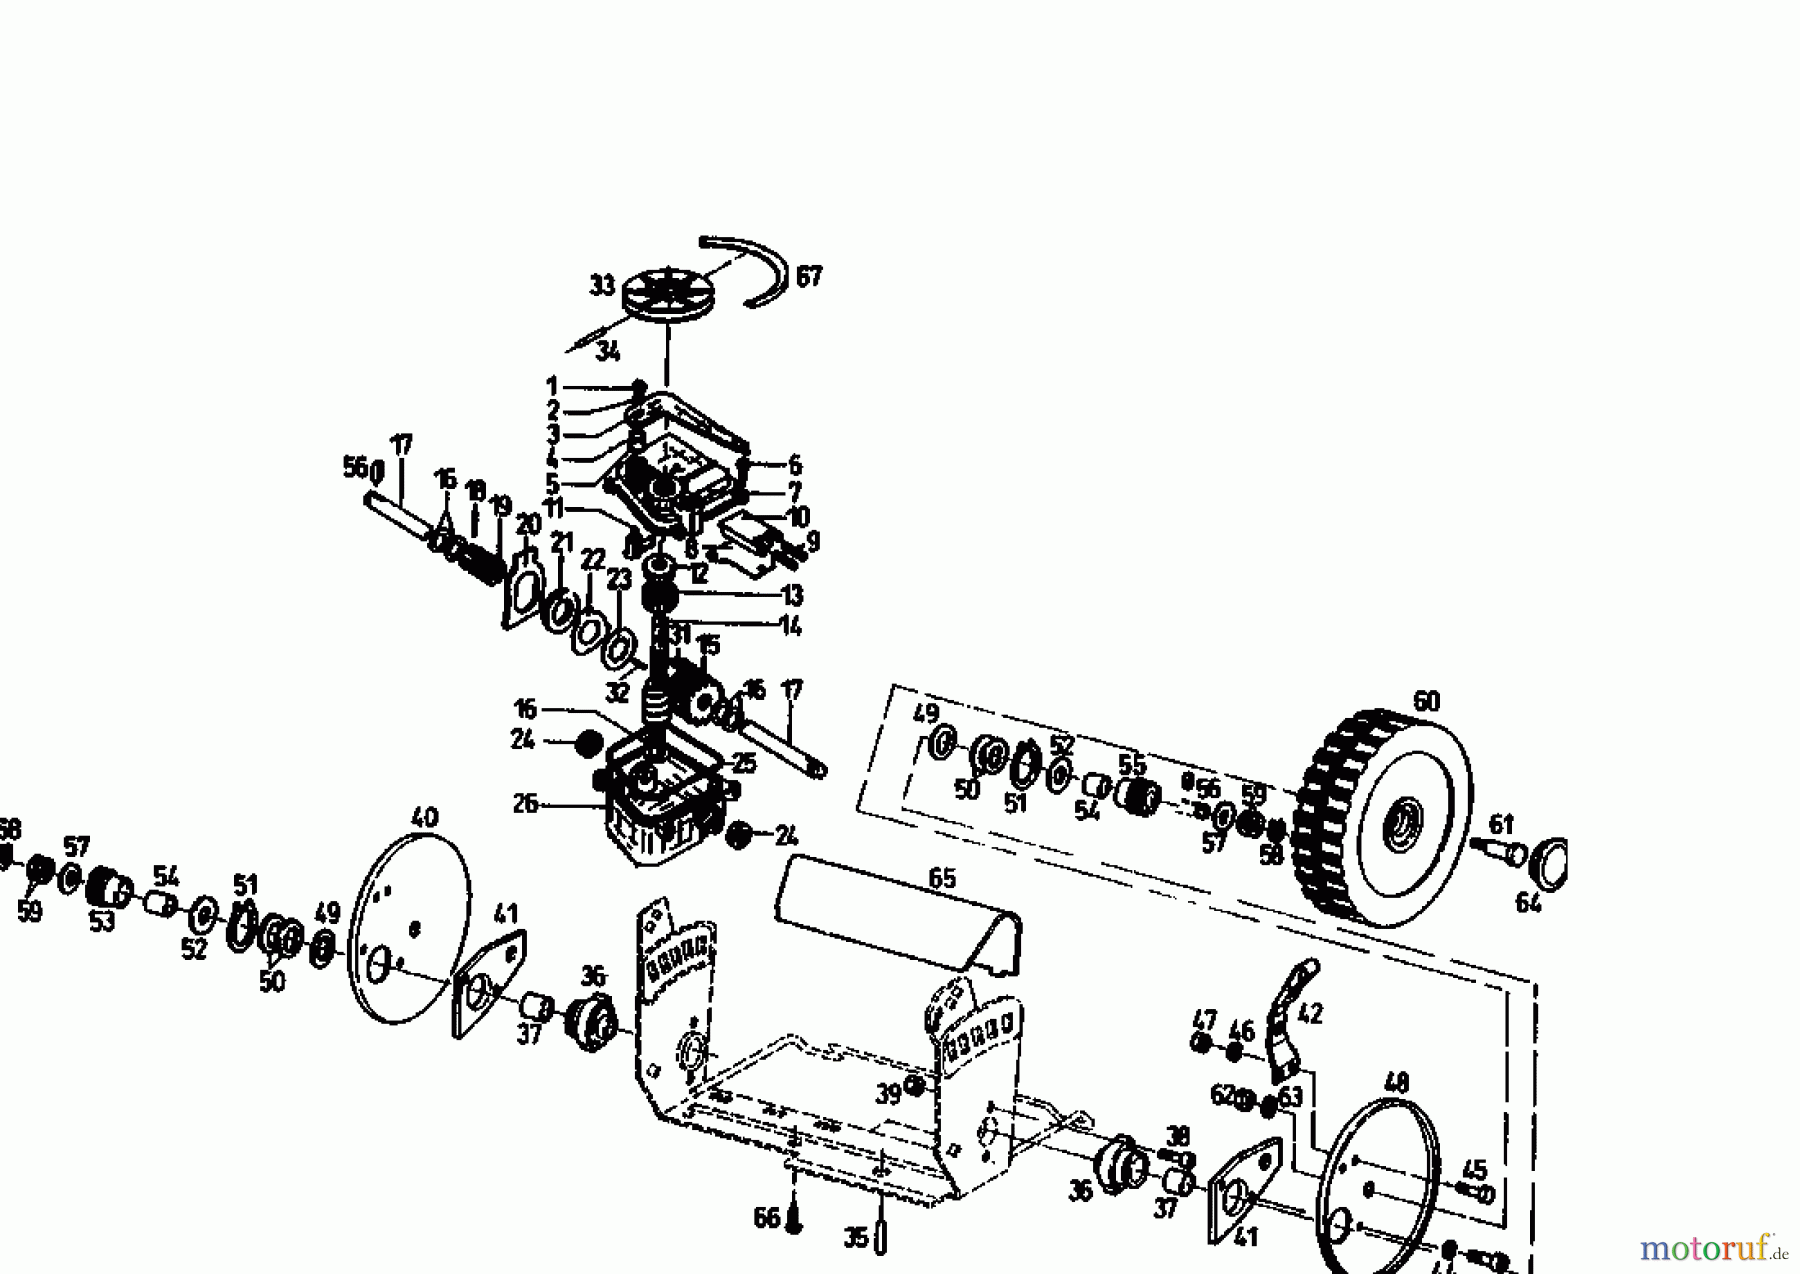  Golf Petrol mower self propelled 445 HR 4 E 04011.02  (1990) Gearbox